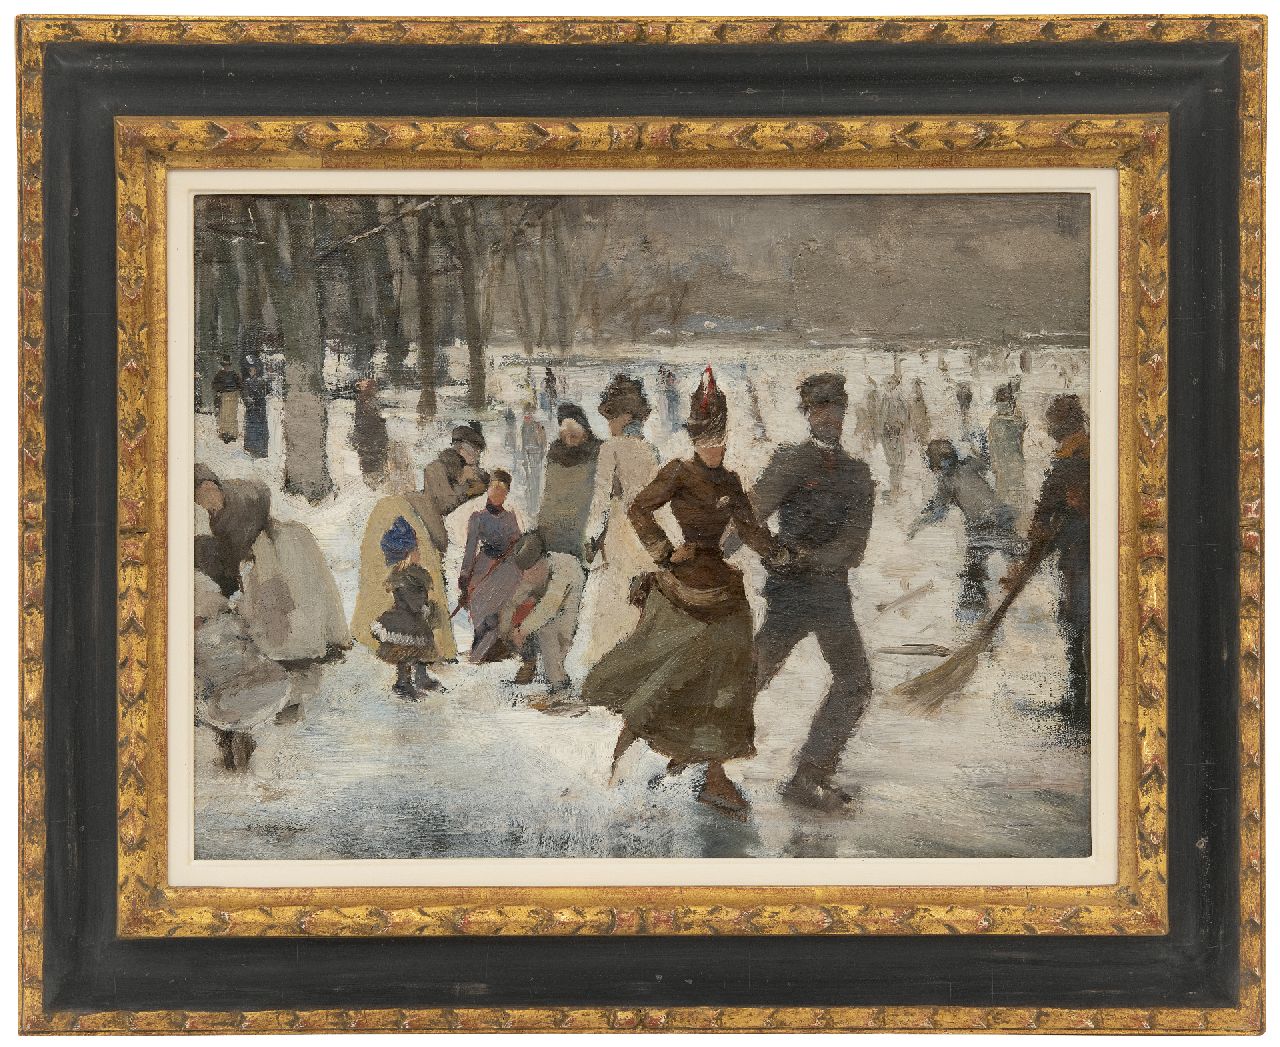 Jonge J.A. de | Johan Antoni de Jonge | Paintings offered for sale | Ice skating on a forest pond, oil on canvas laid down on panel 31.0 x 41.6 cm